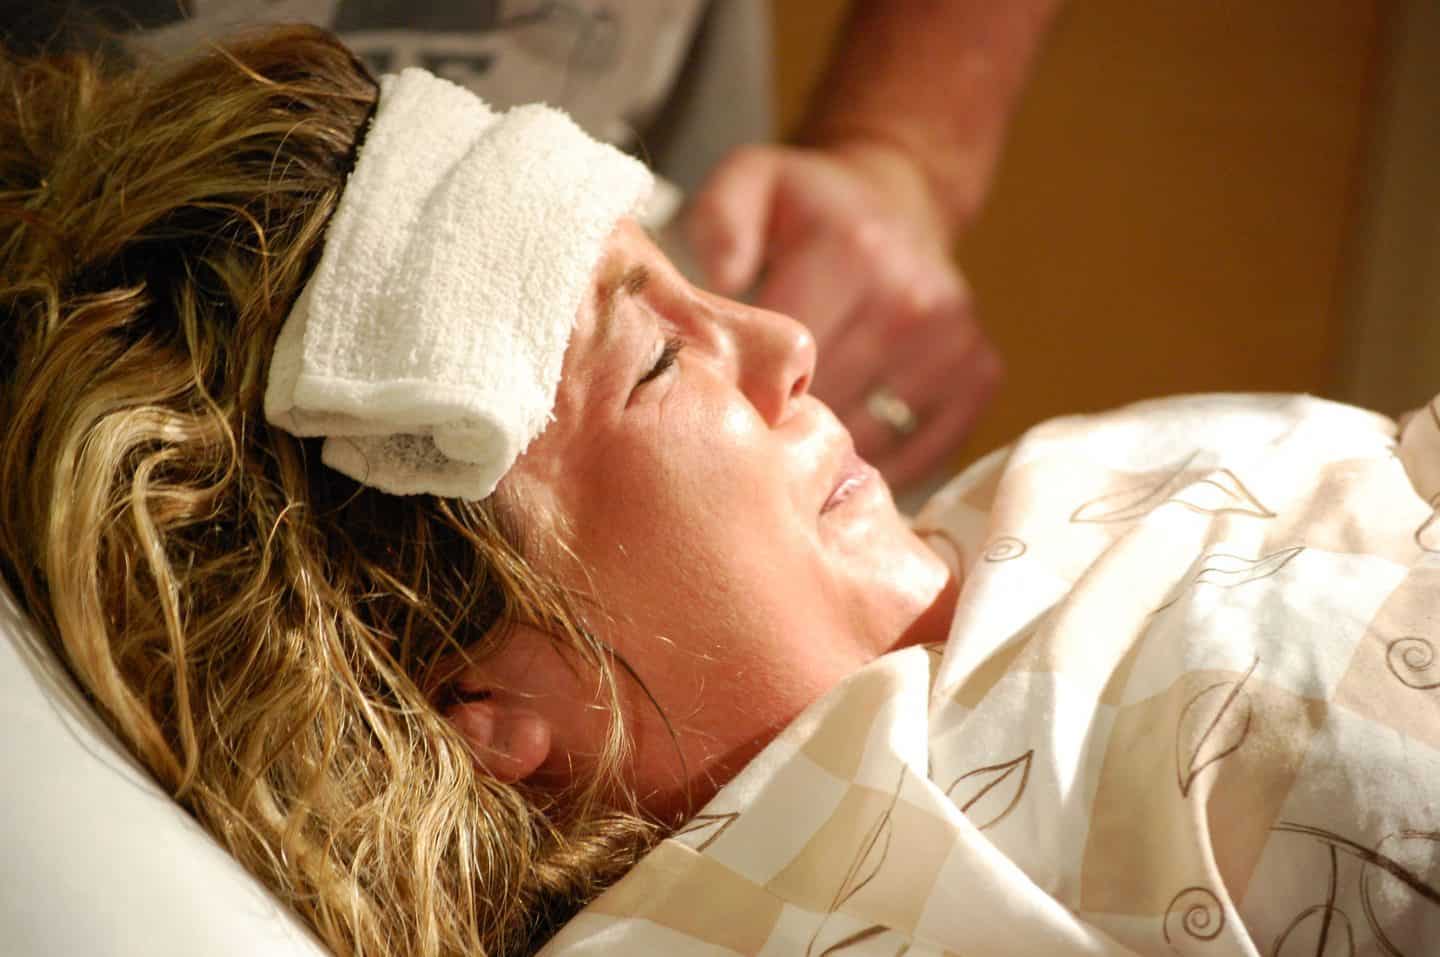 woman experiencing natural childbirth pushing